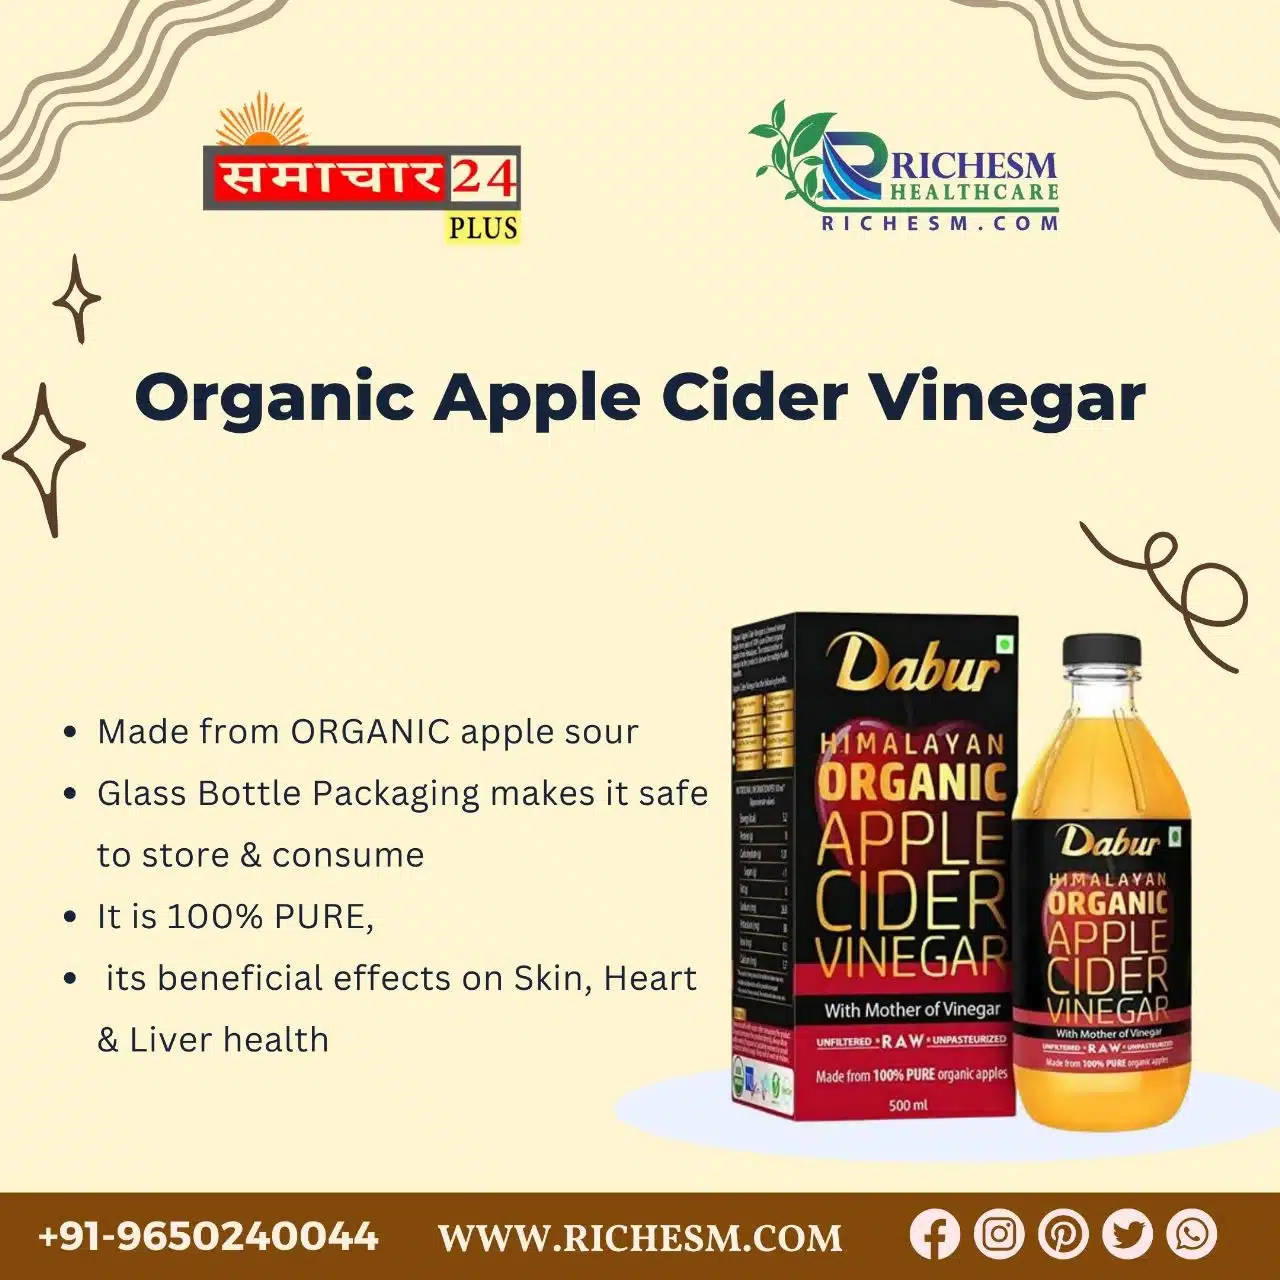 Apple Cider Vinegar 2